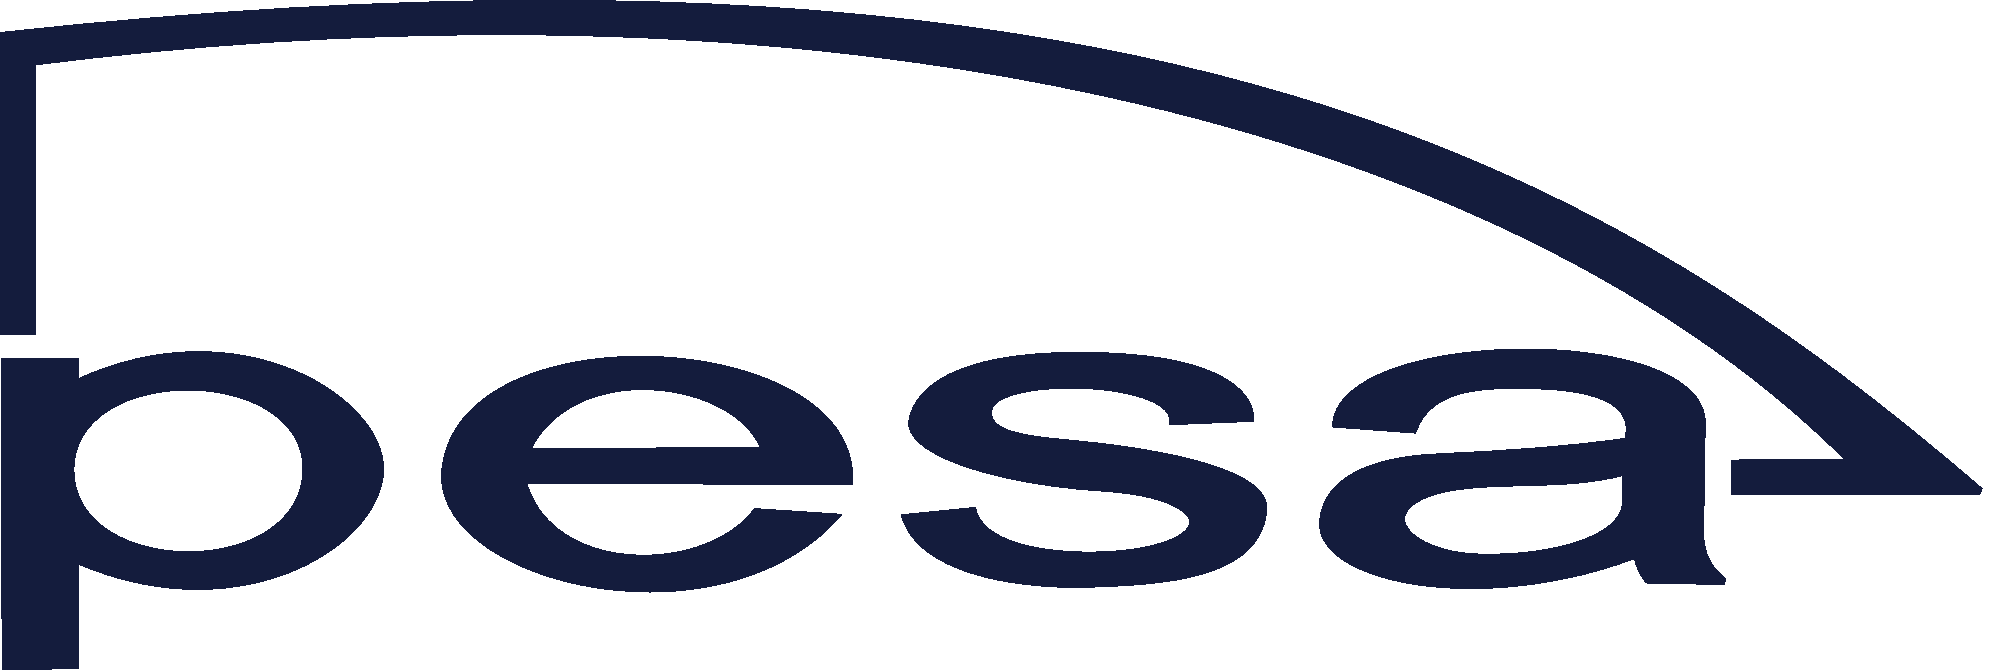 PESA logo